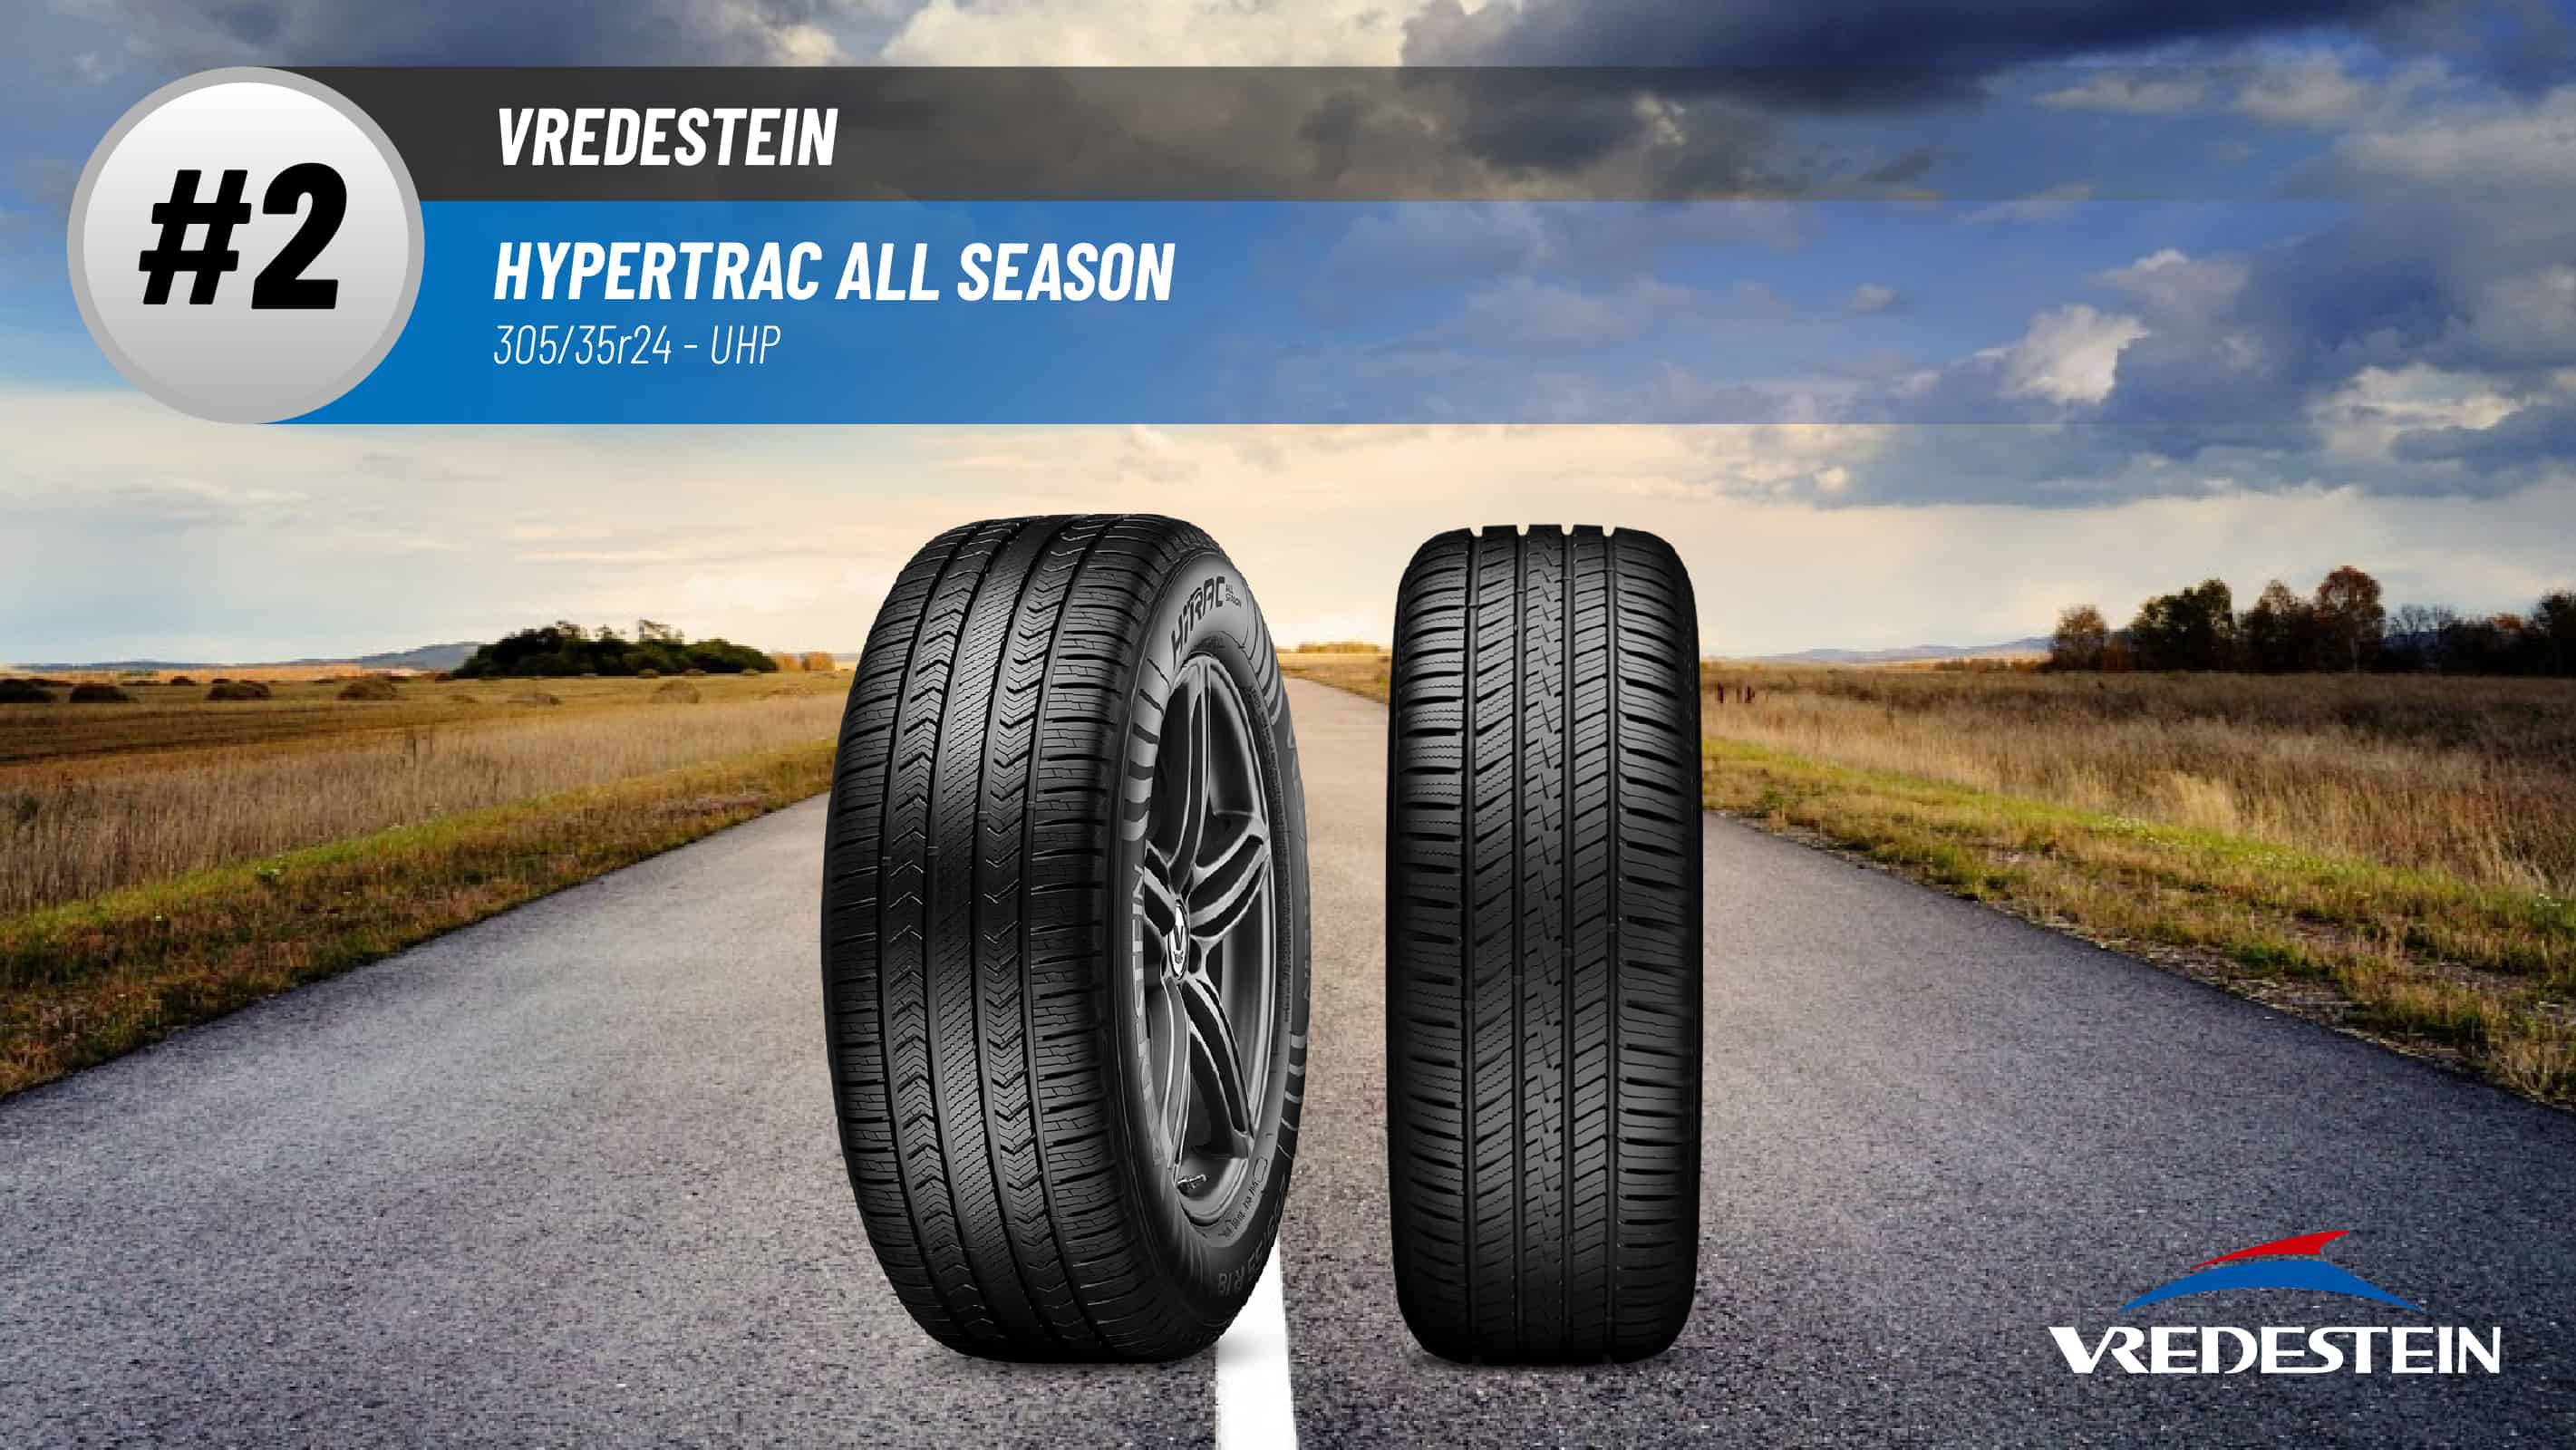 Top #2 UHP Tires: Vredestein Hypertrac All Season – 305/35R24